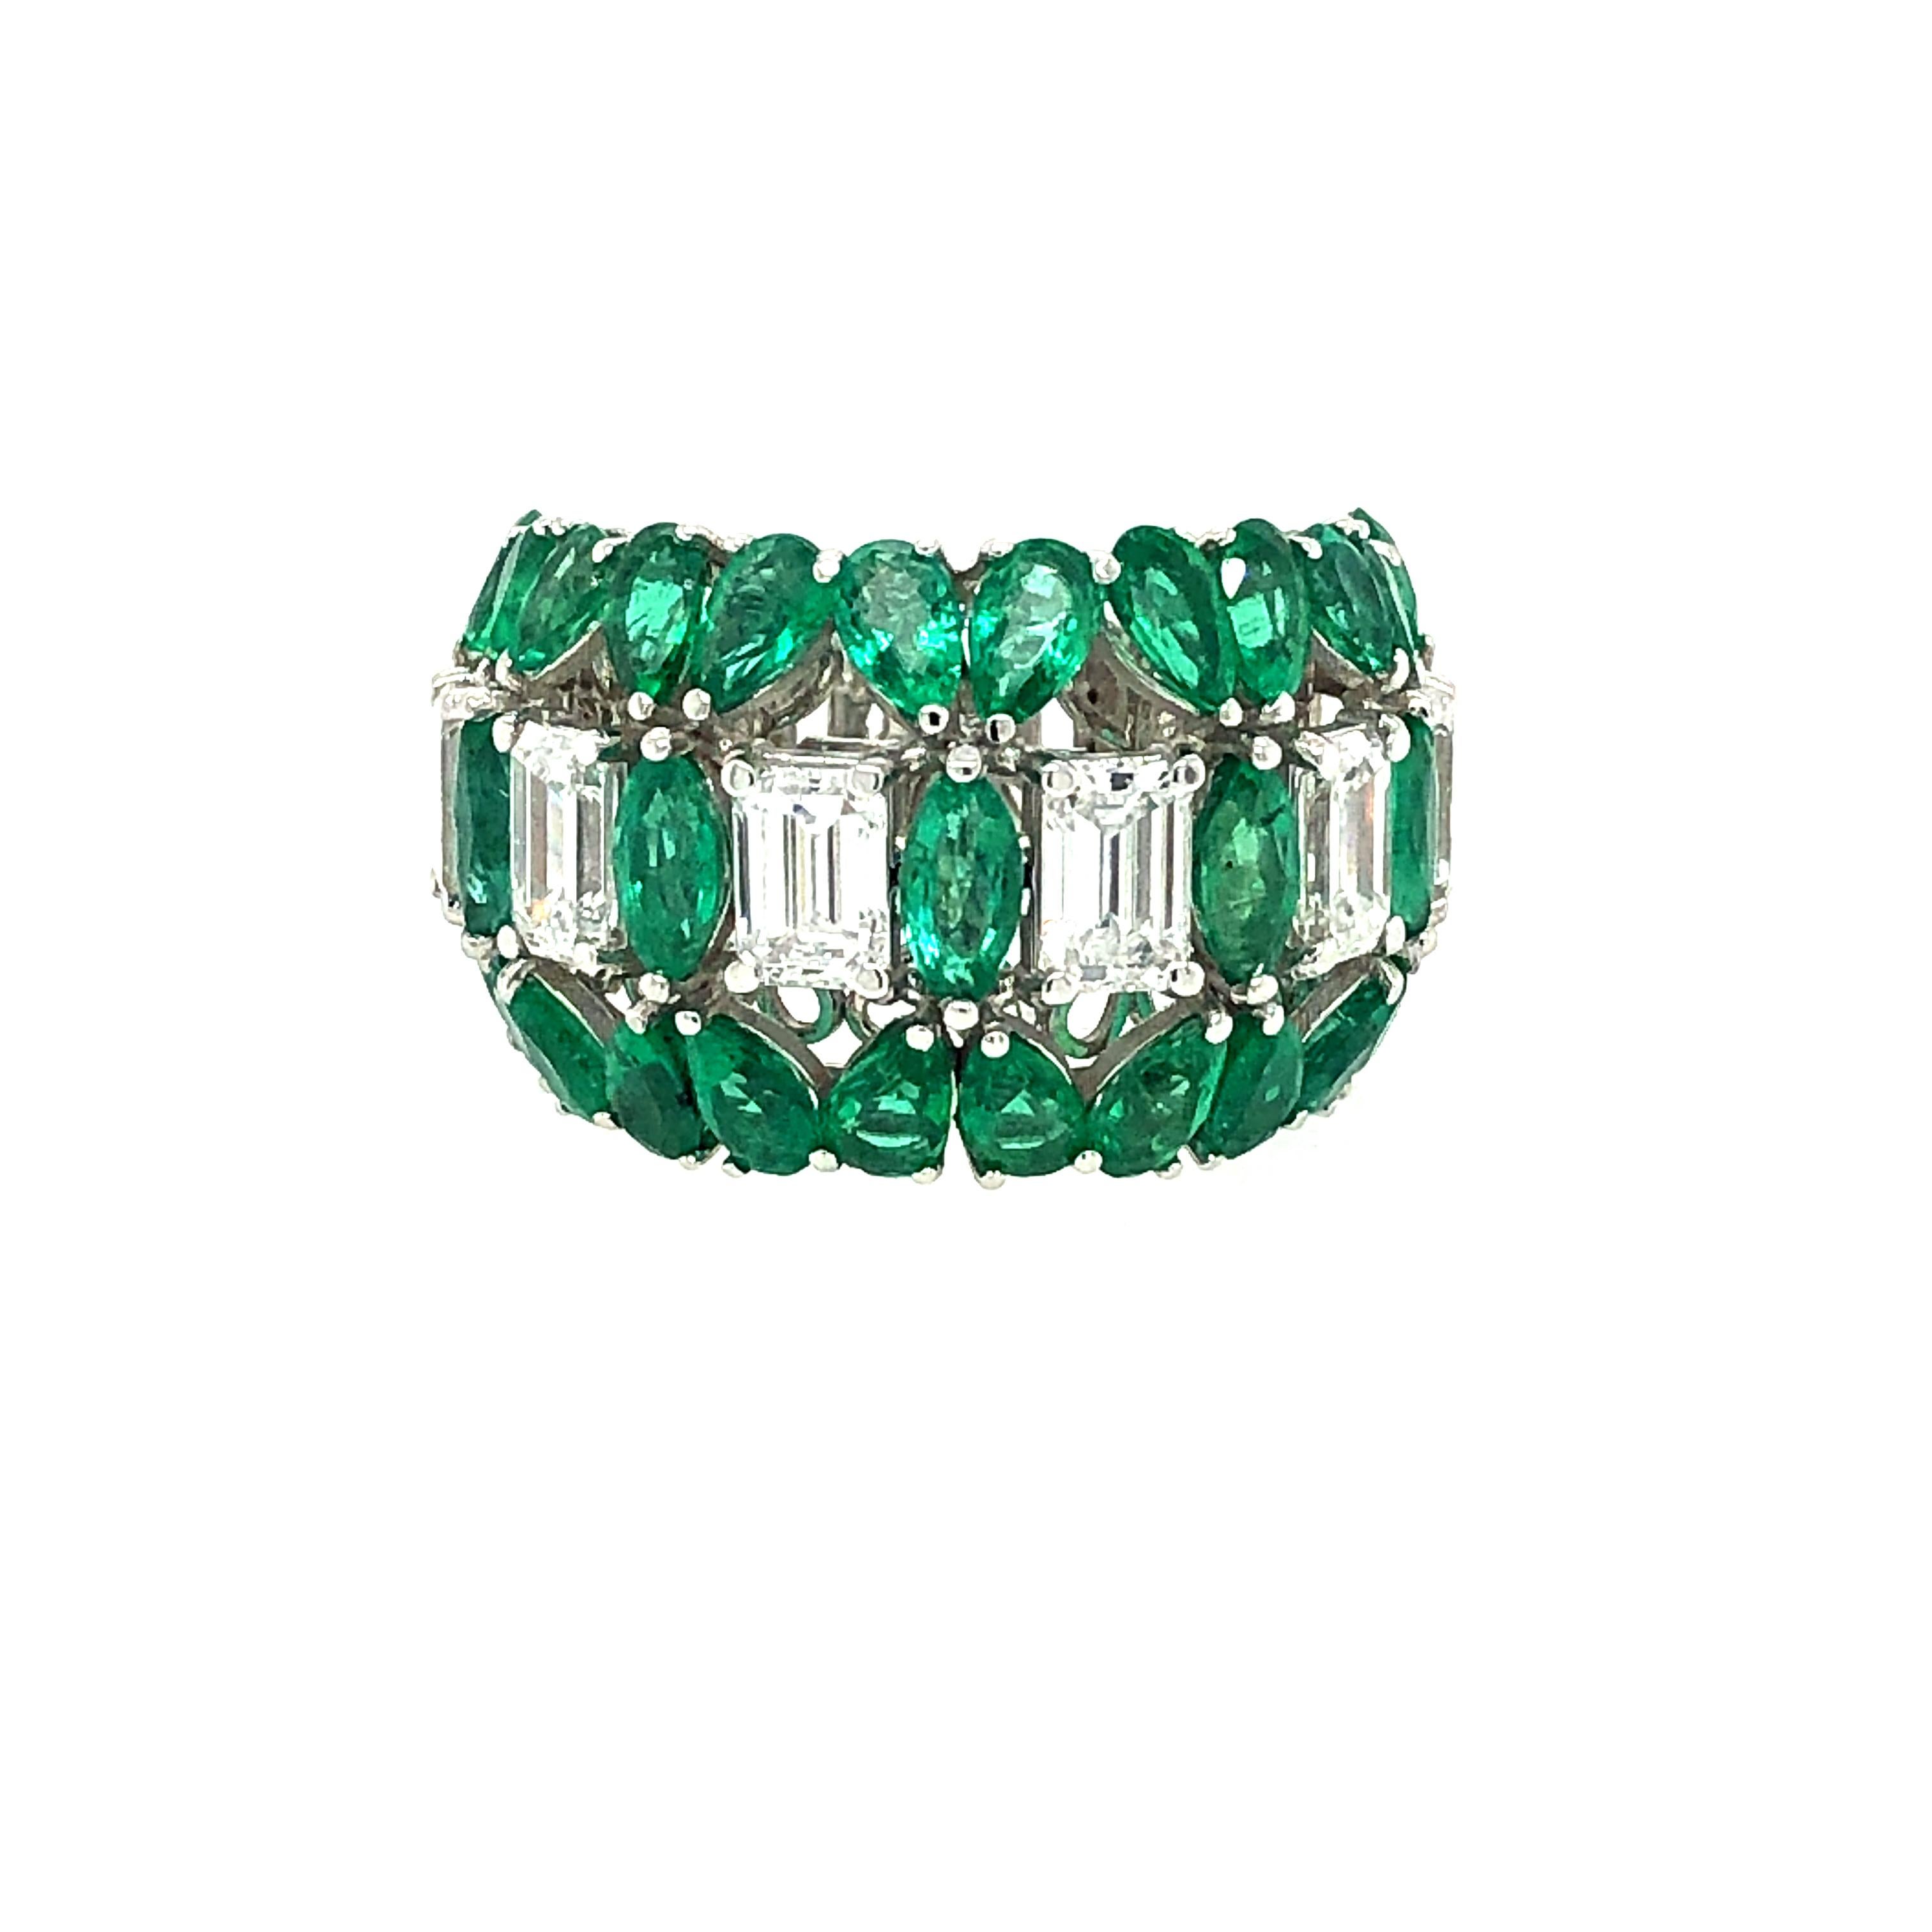 7 carat emerald diamond ring